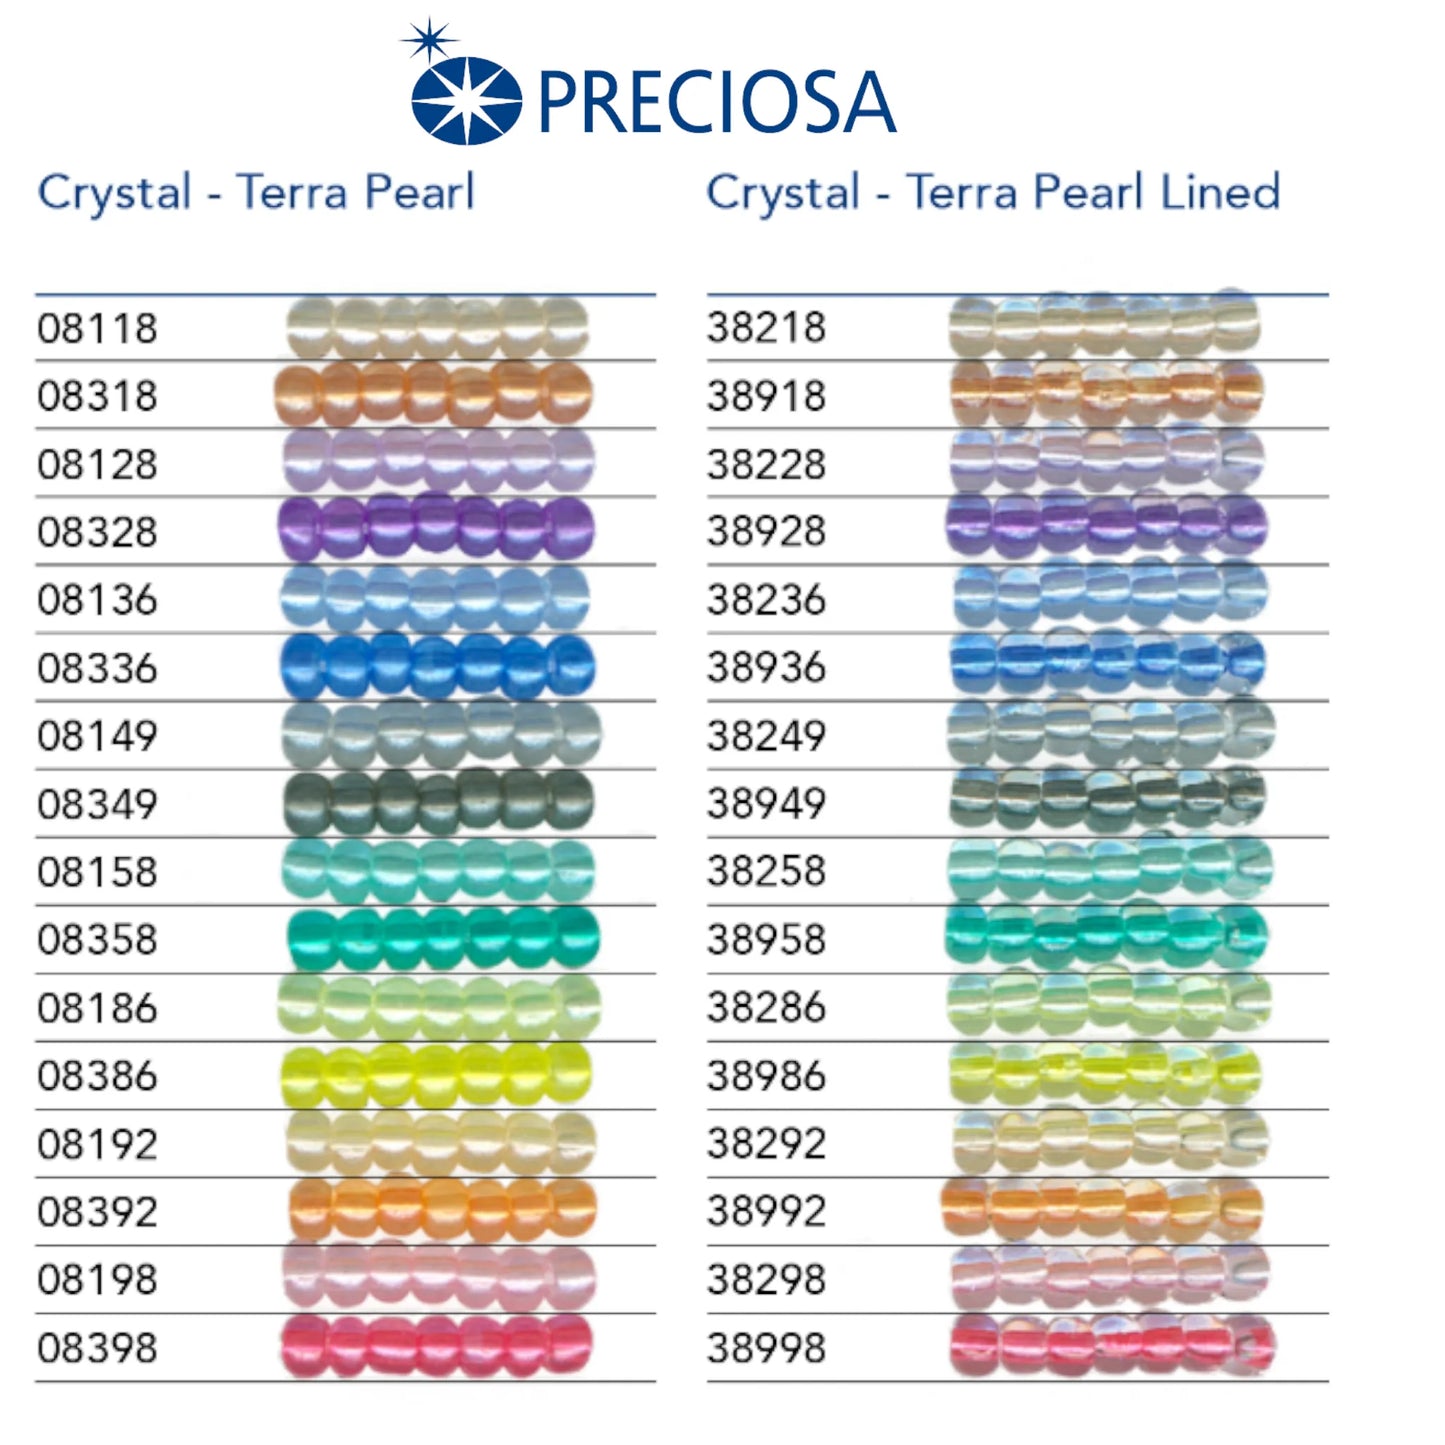 08349 Czech seed beads PRECIOSA Rocailles 10/0 grey. Crystal - Terra Pearl.